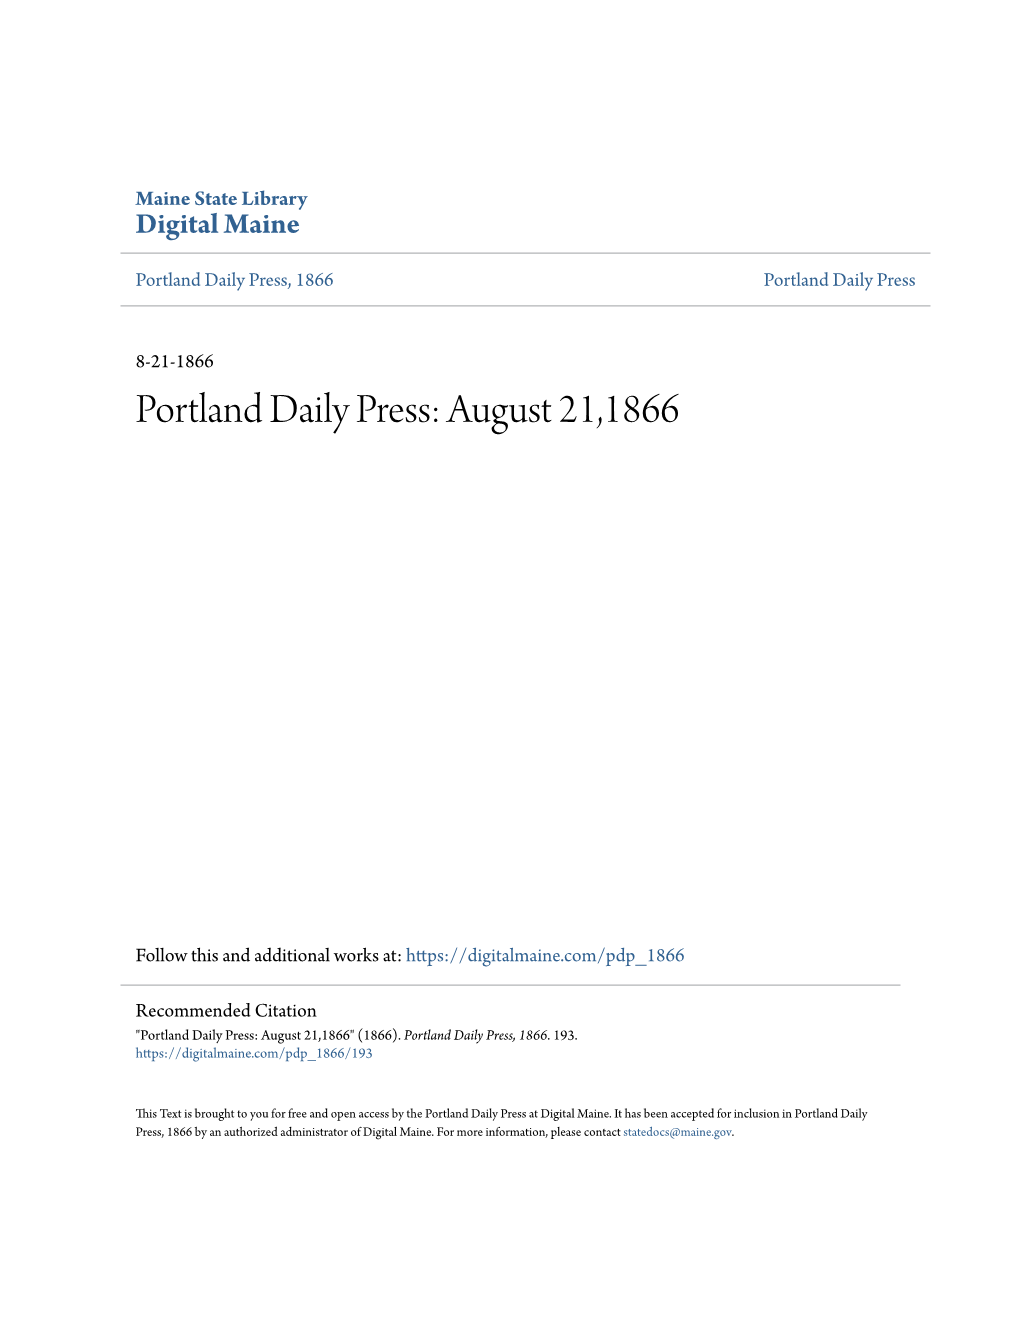 Portland Daily Press: August 21,1866